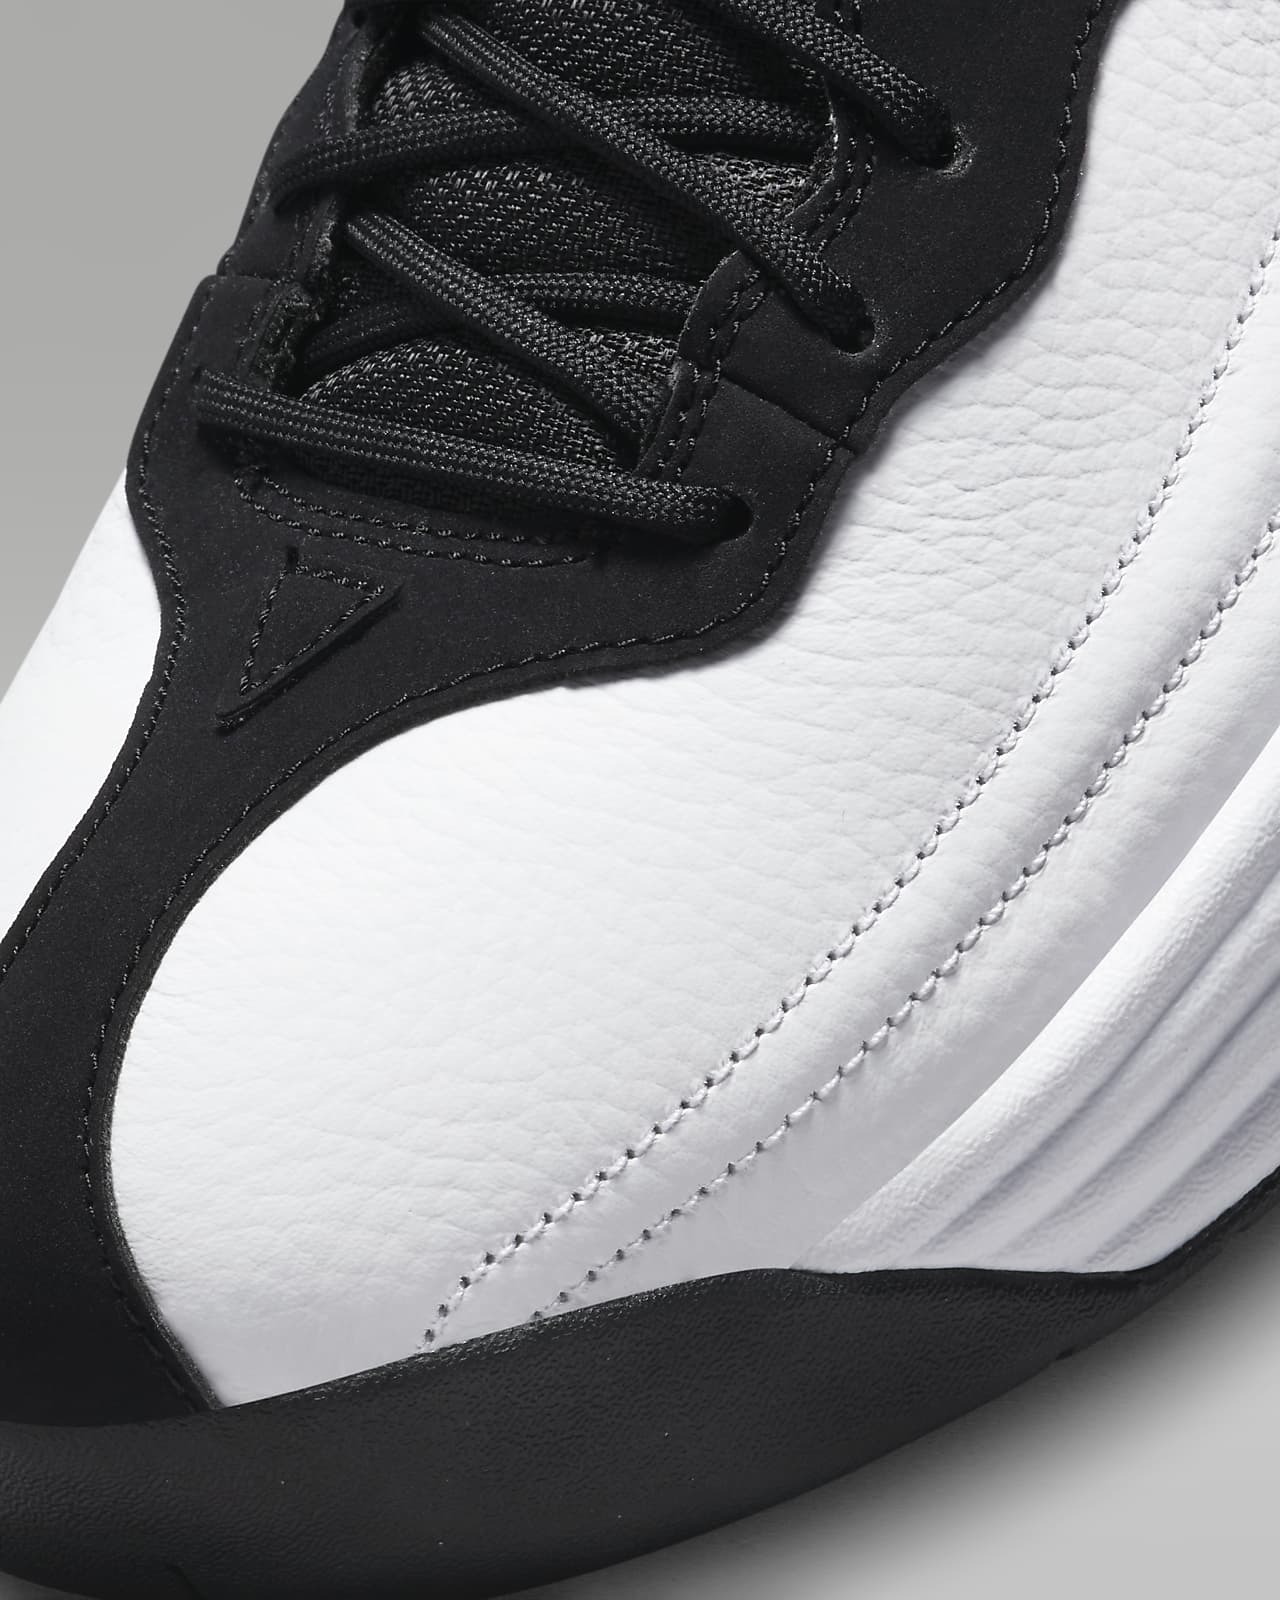 Nike Jordan Shoes